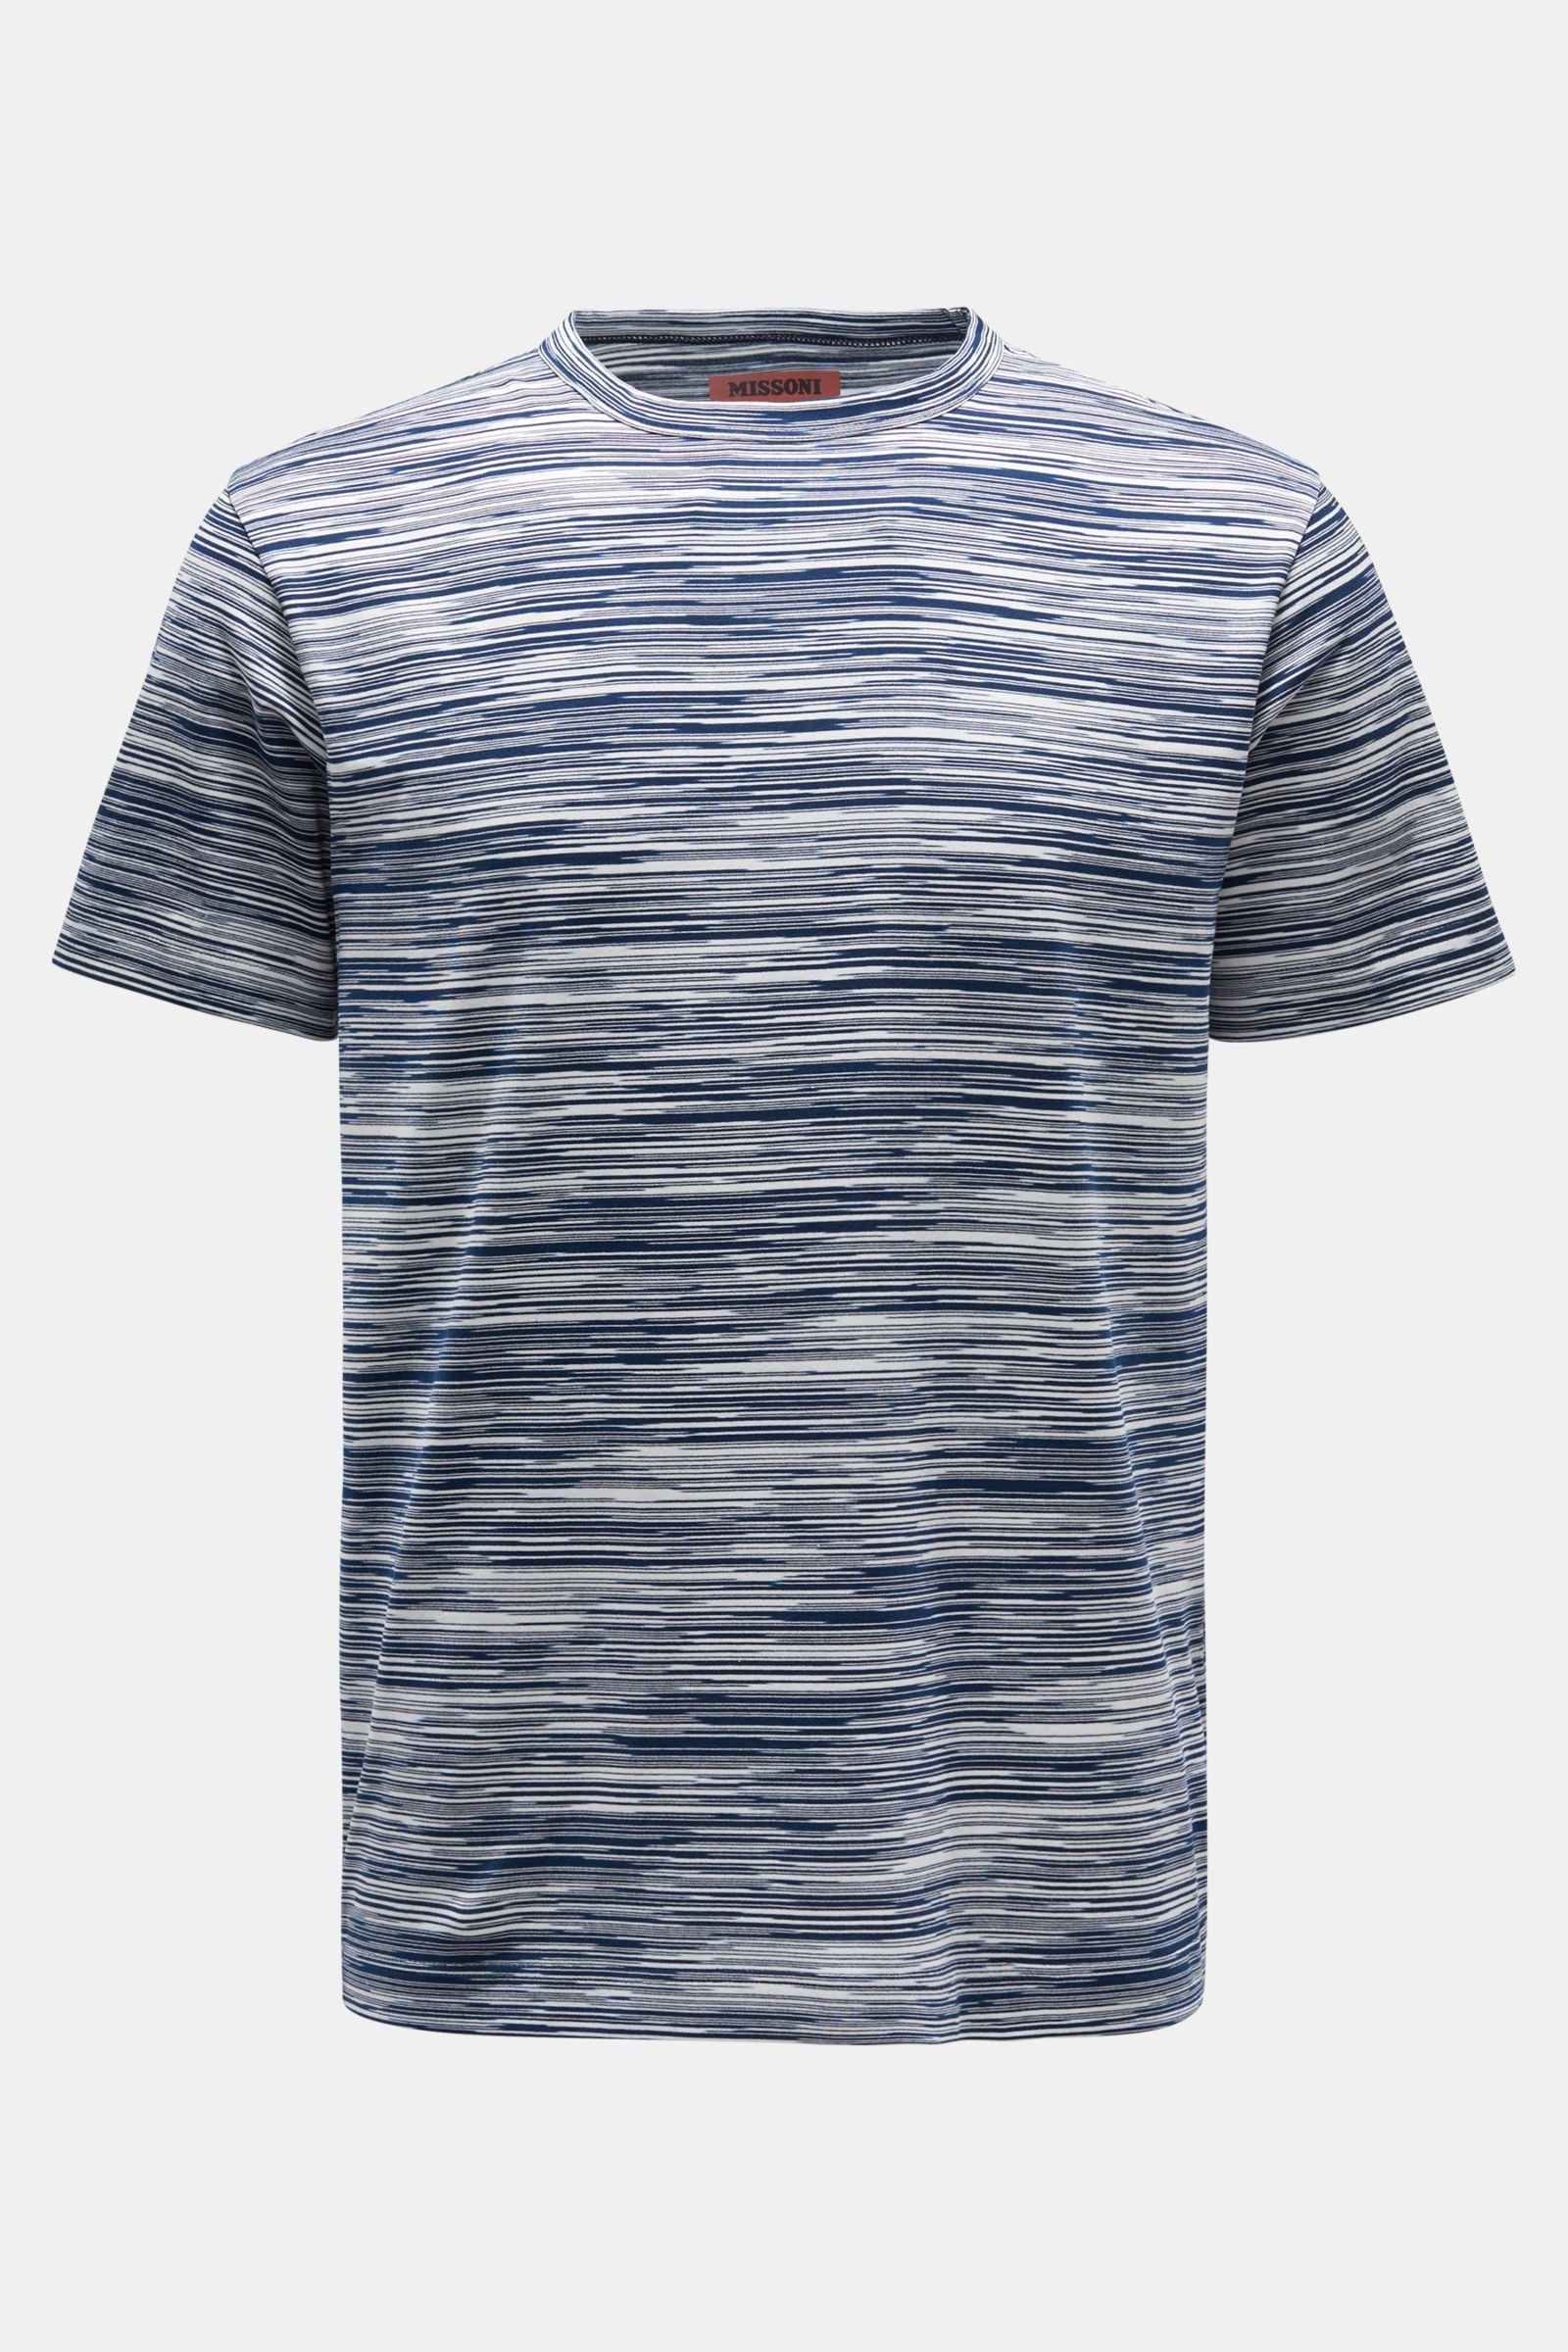 Crew neck T-shirt navy/white striped